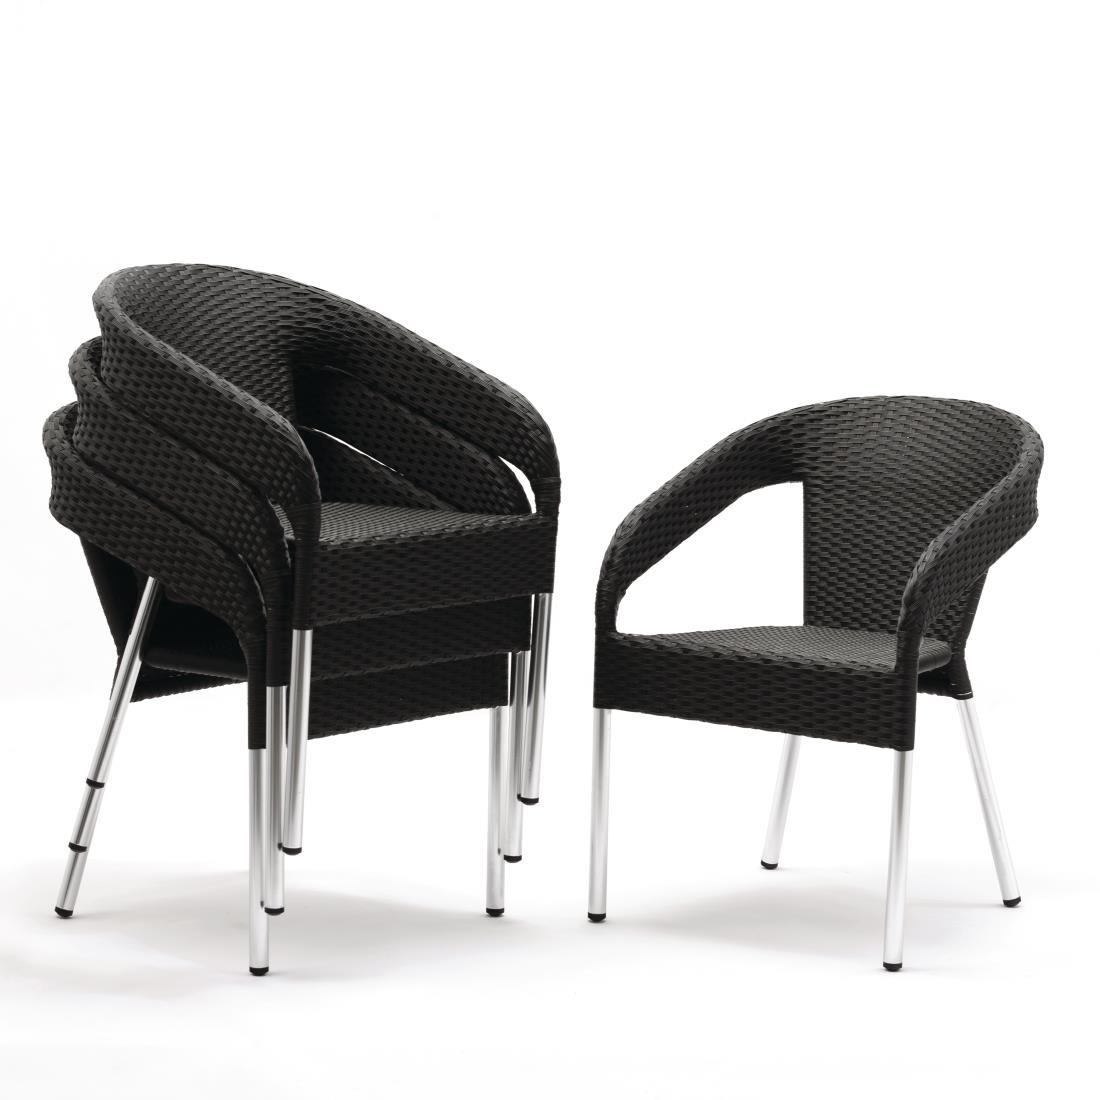 Bolero Wicker Wraparound Bistro Chairs Charcoal (Pack of 4) - CG223  - 1